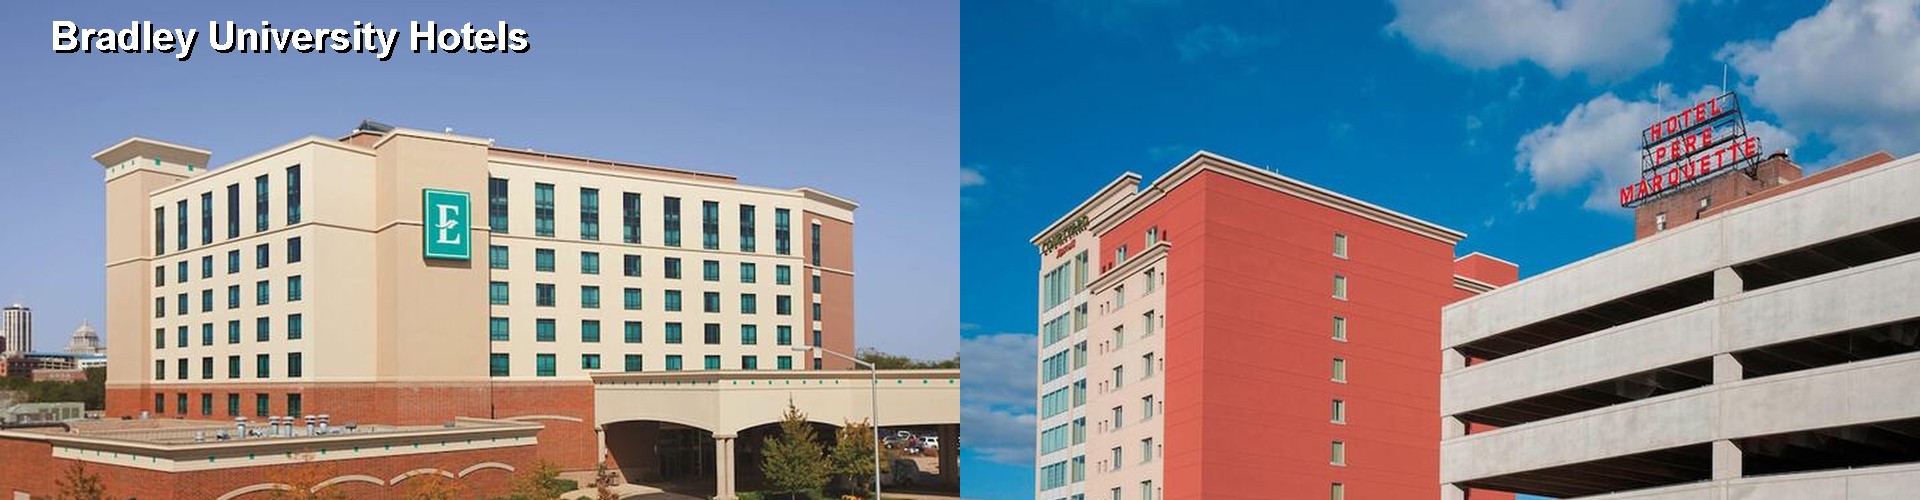 5 Best Hotels near Bradley University